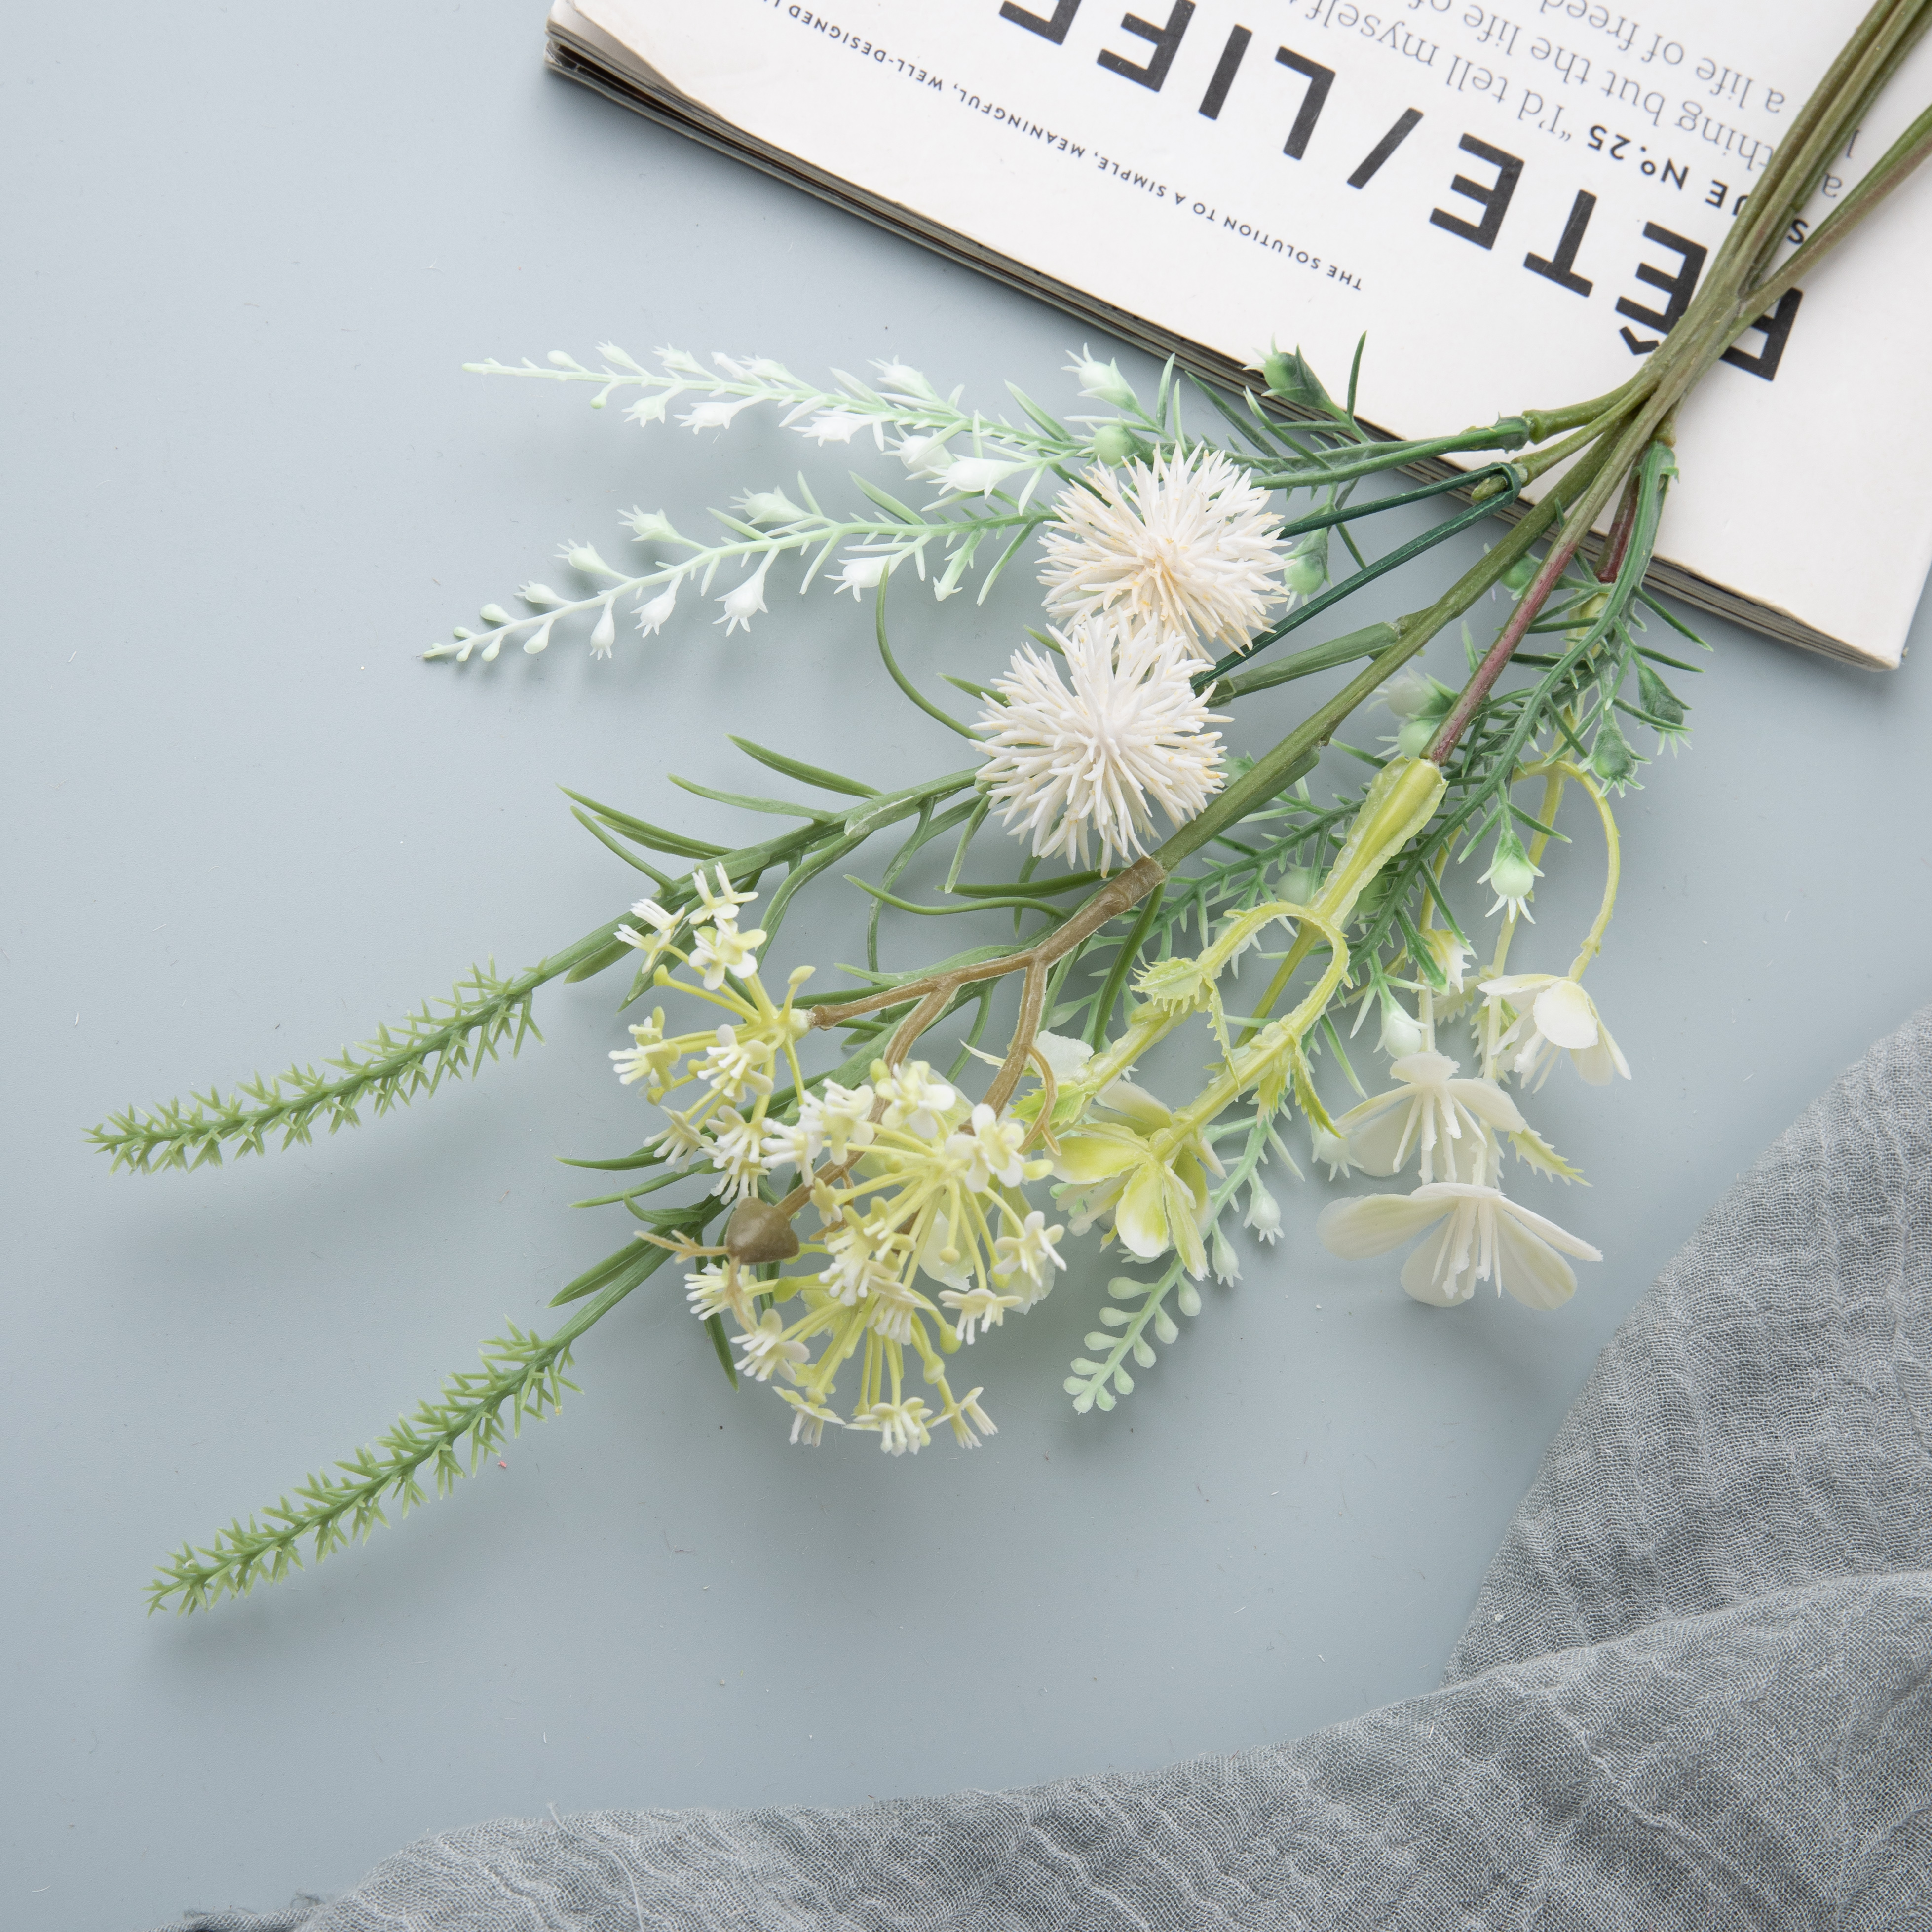 DY1-6051 အတုပန်းစည်း Dandelion လူကြိုက်များသောမင်္ဂလာဆောင်စင်တာများ